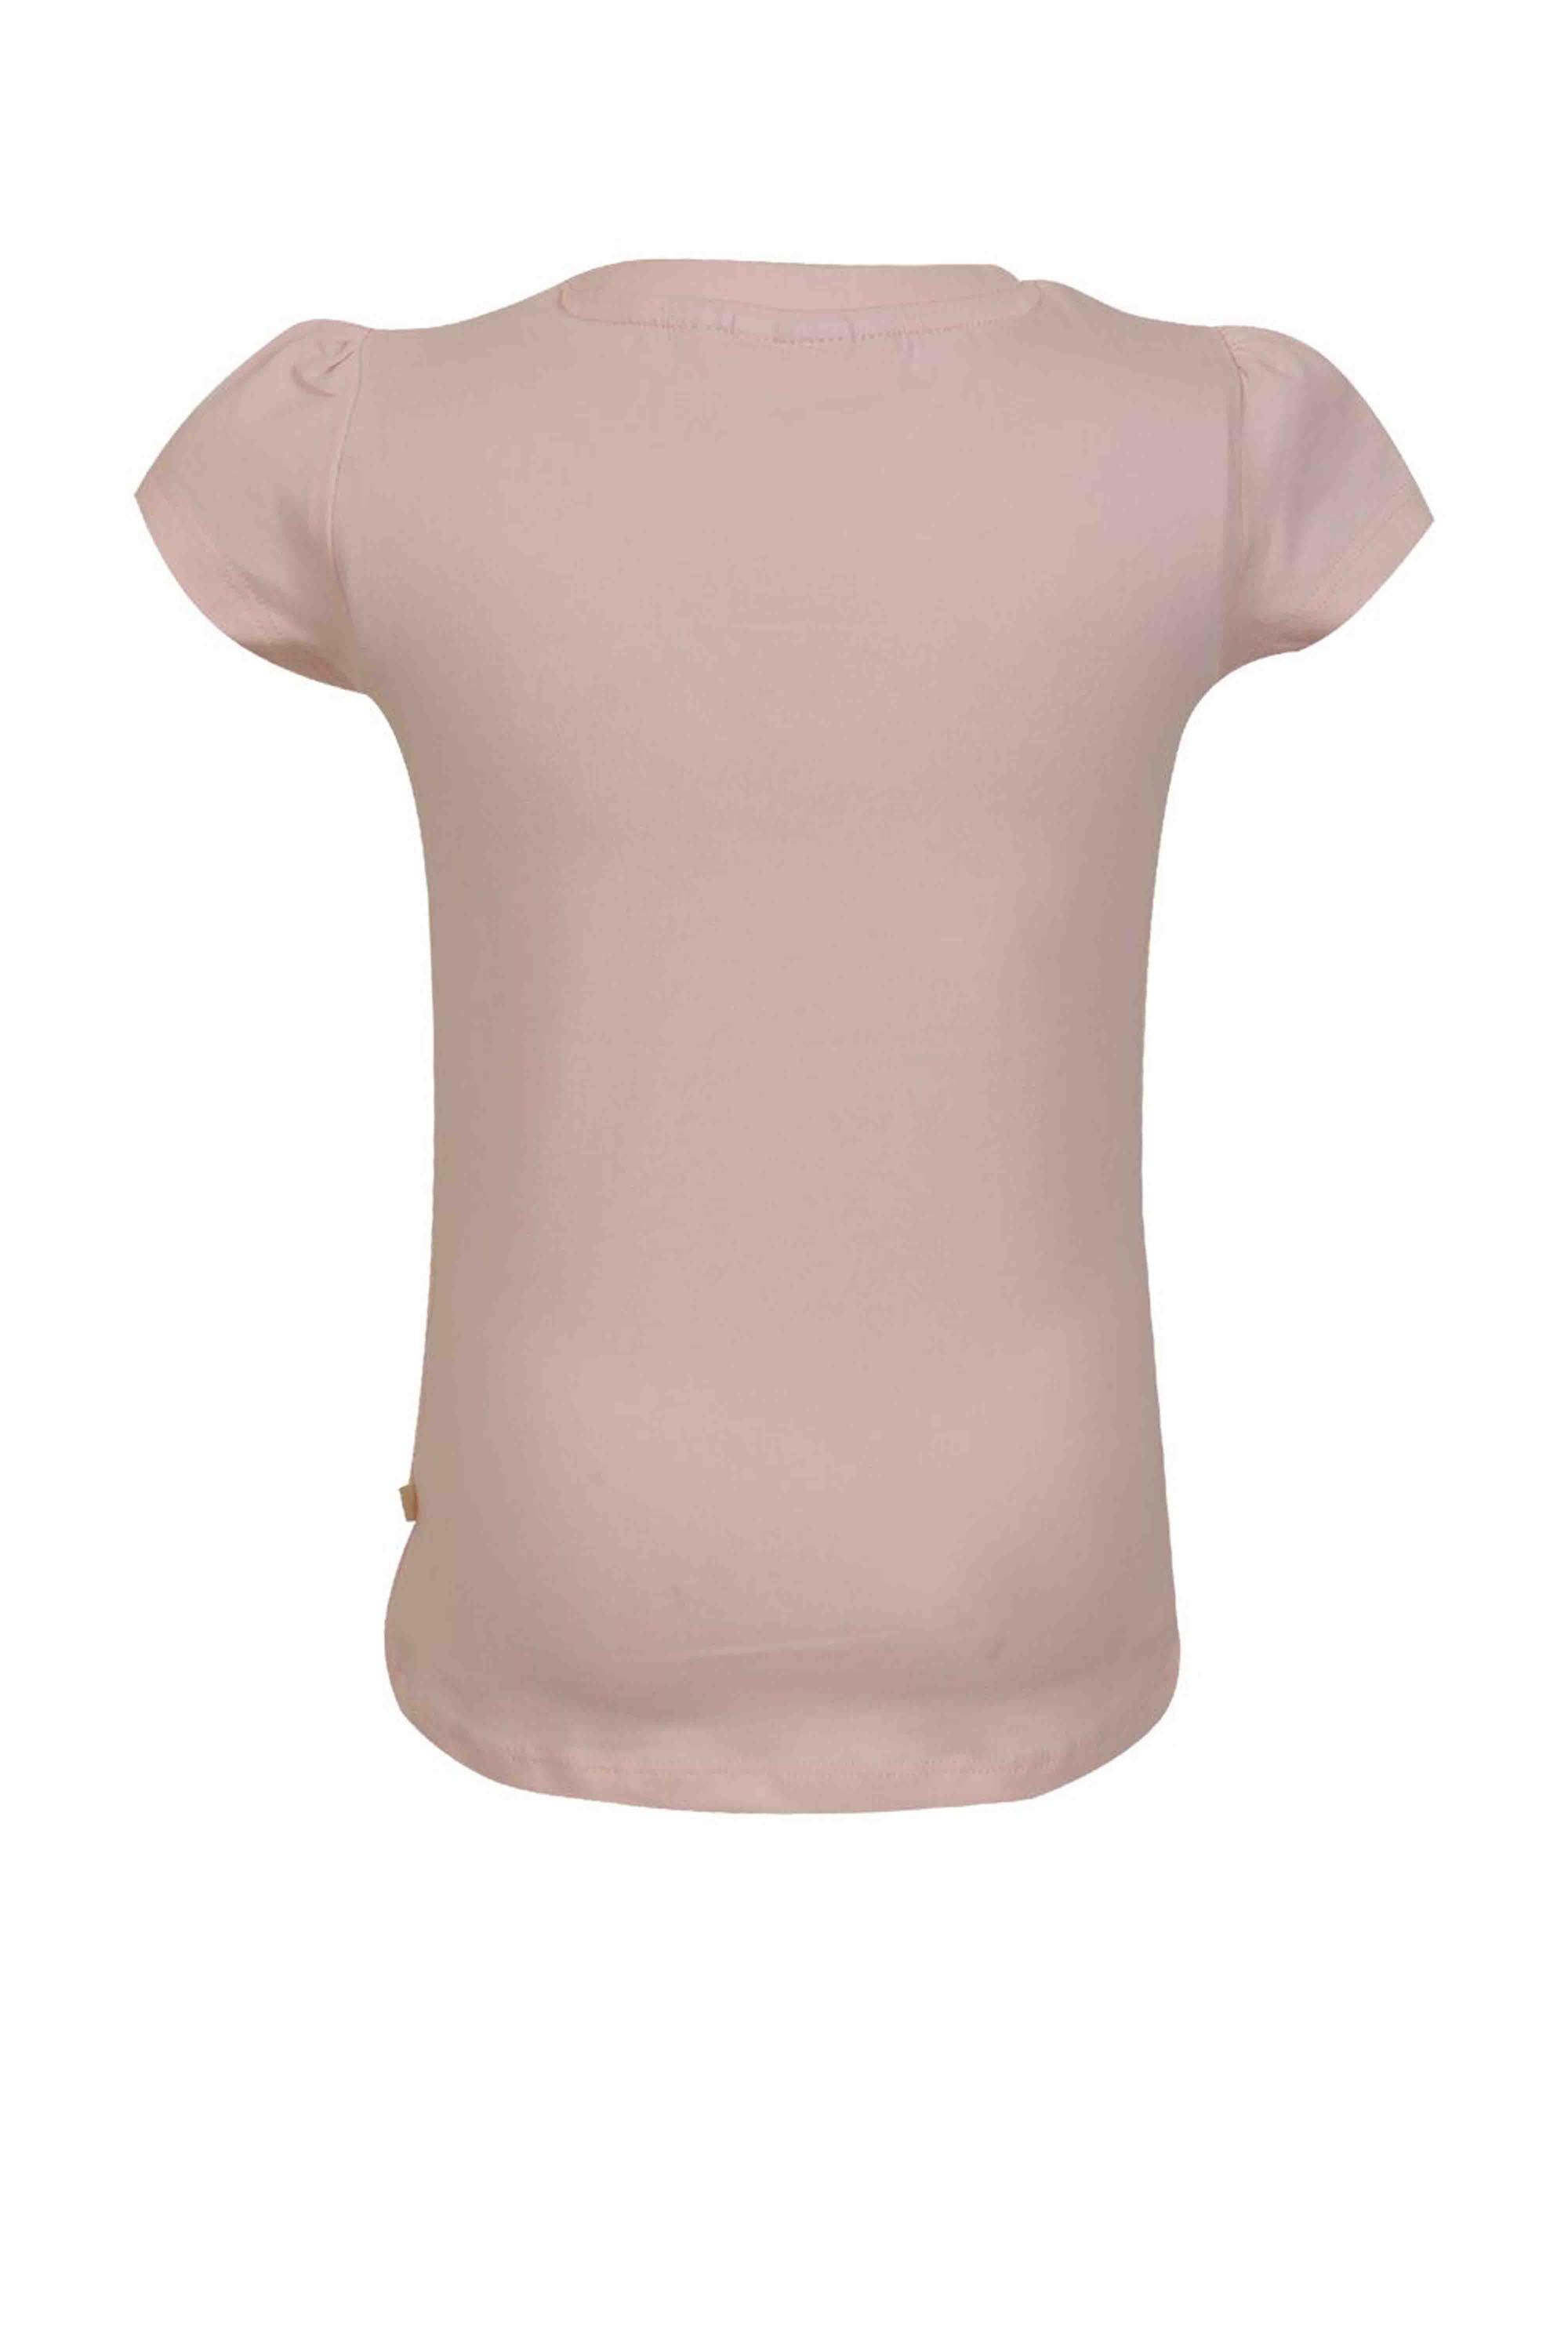 T-Shirt Delphine Pink - Ko&Flo